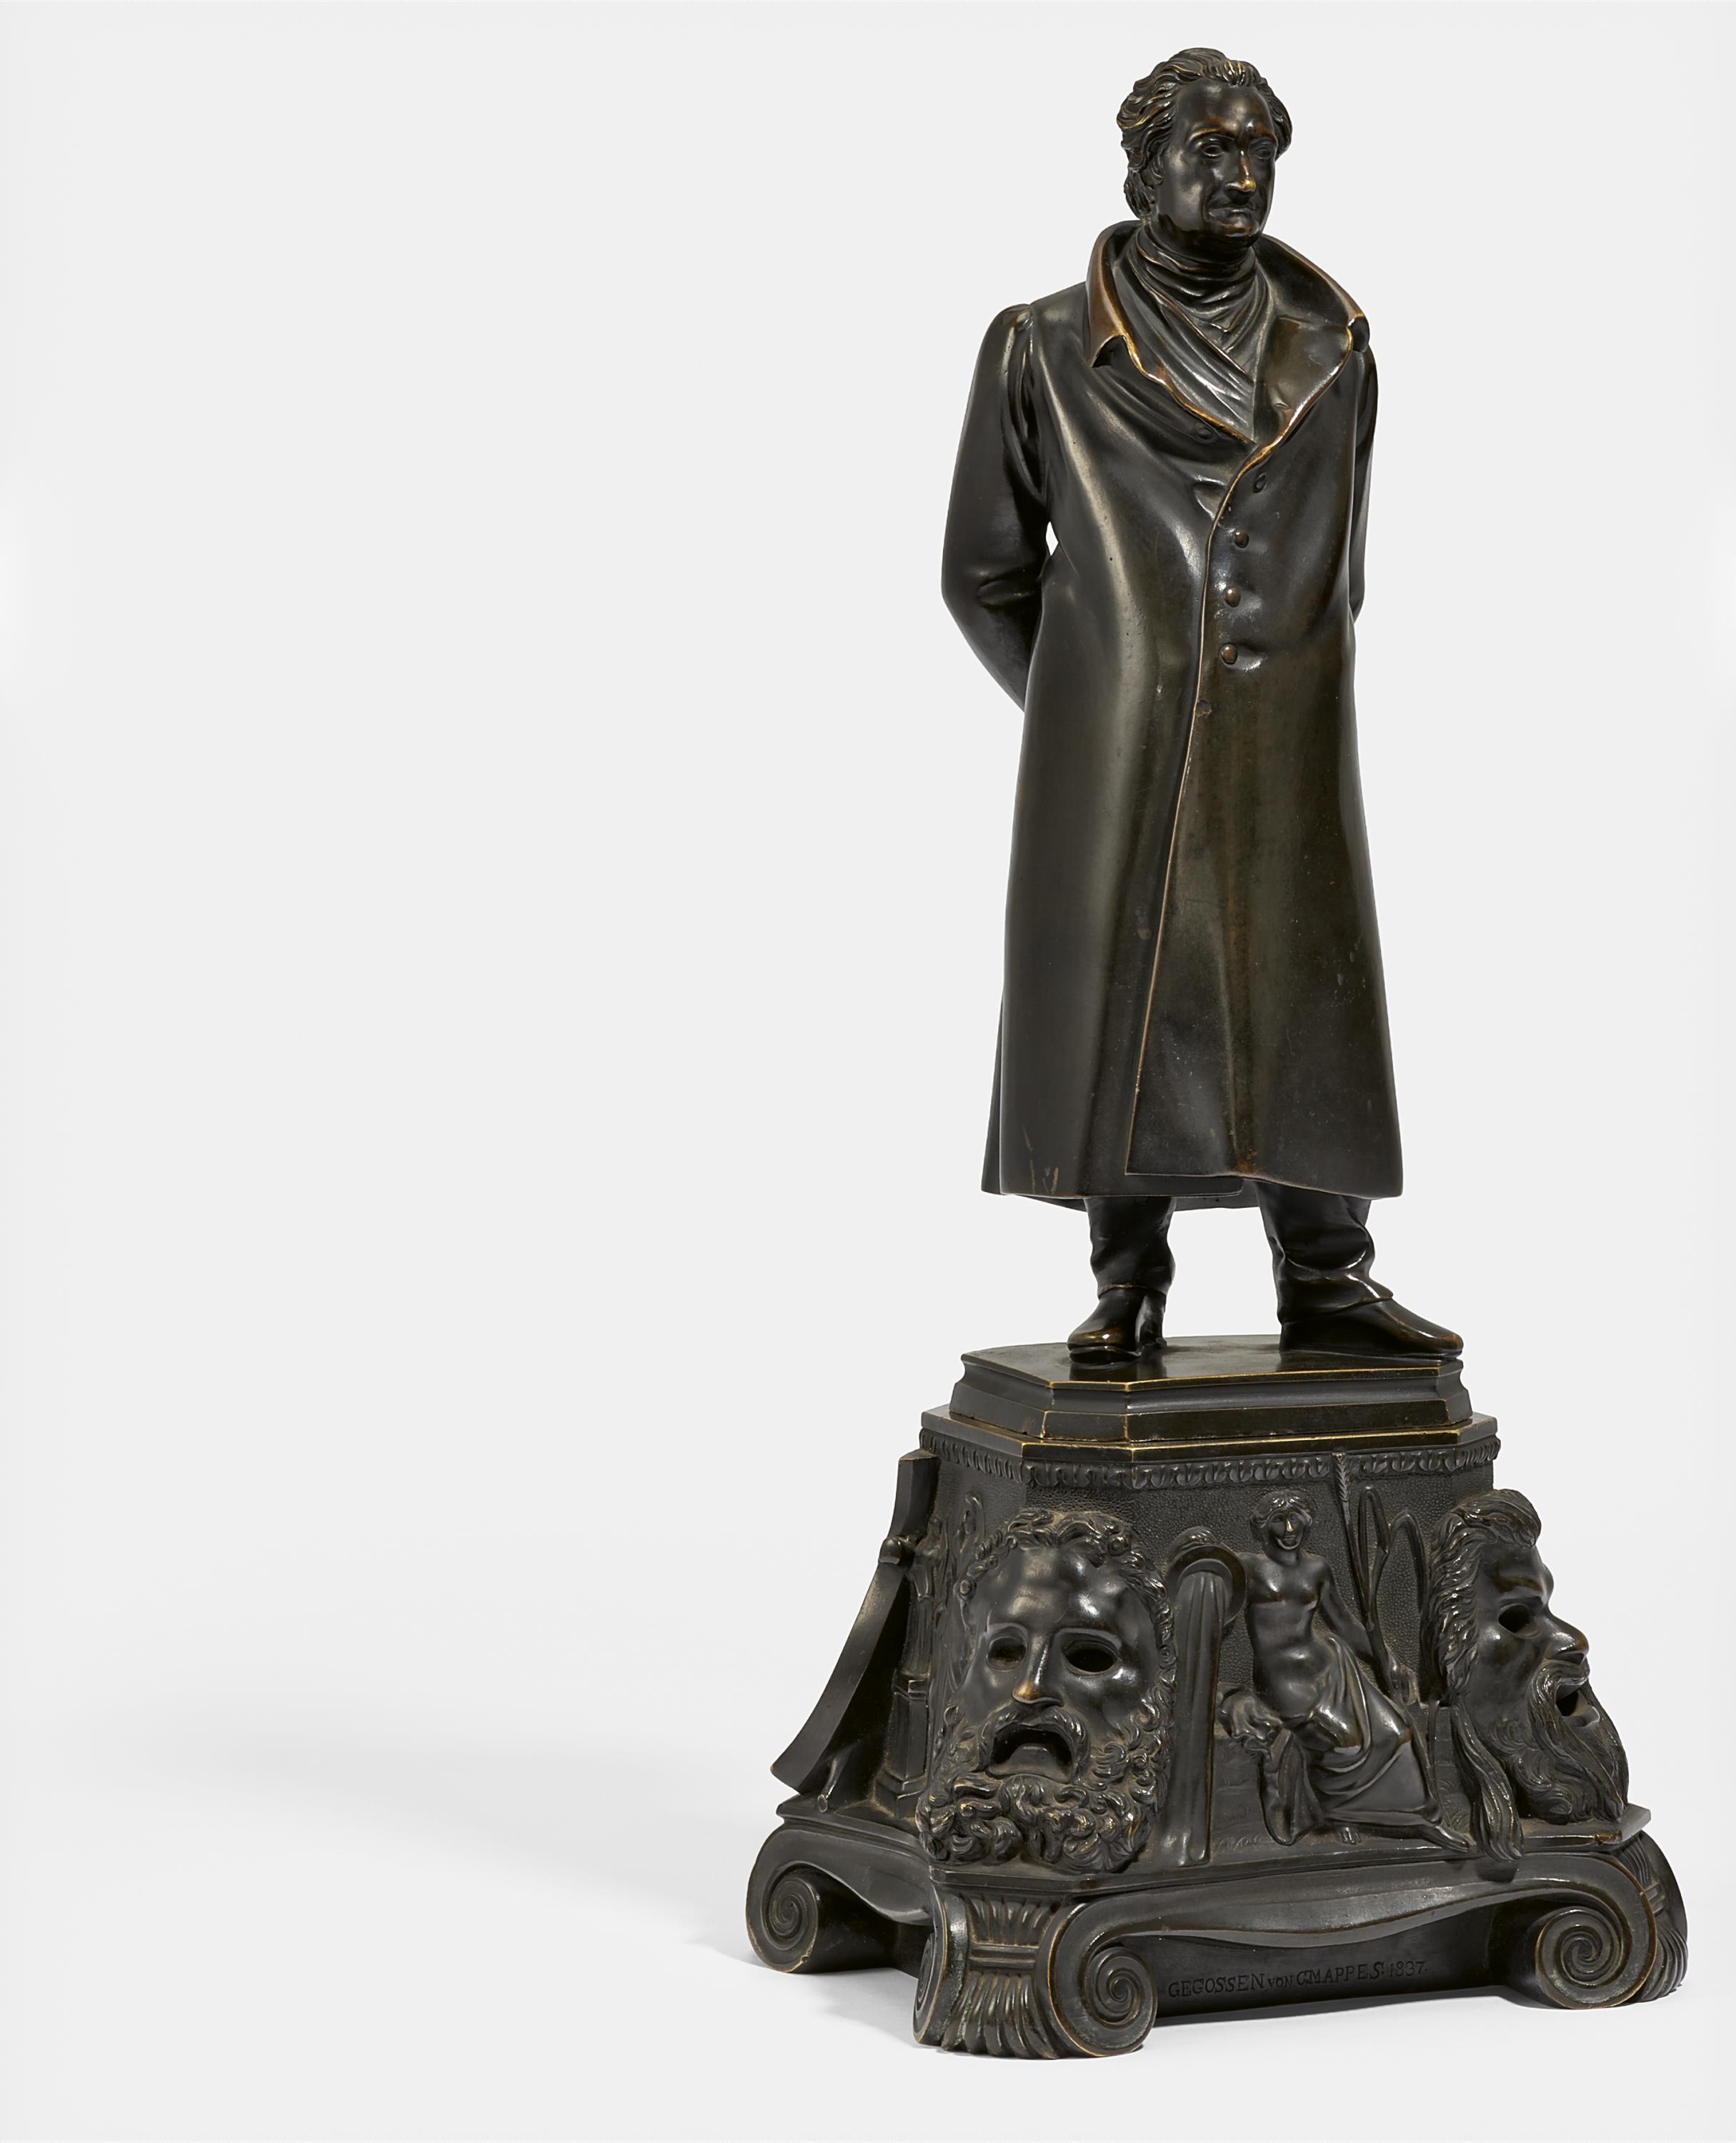 RAUCH, CHRISTIAN DANIEL1777 Arolsen - 1857 DresdenTitle: Johann Wolfgang von Goethe. Statue on a